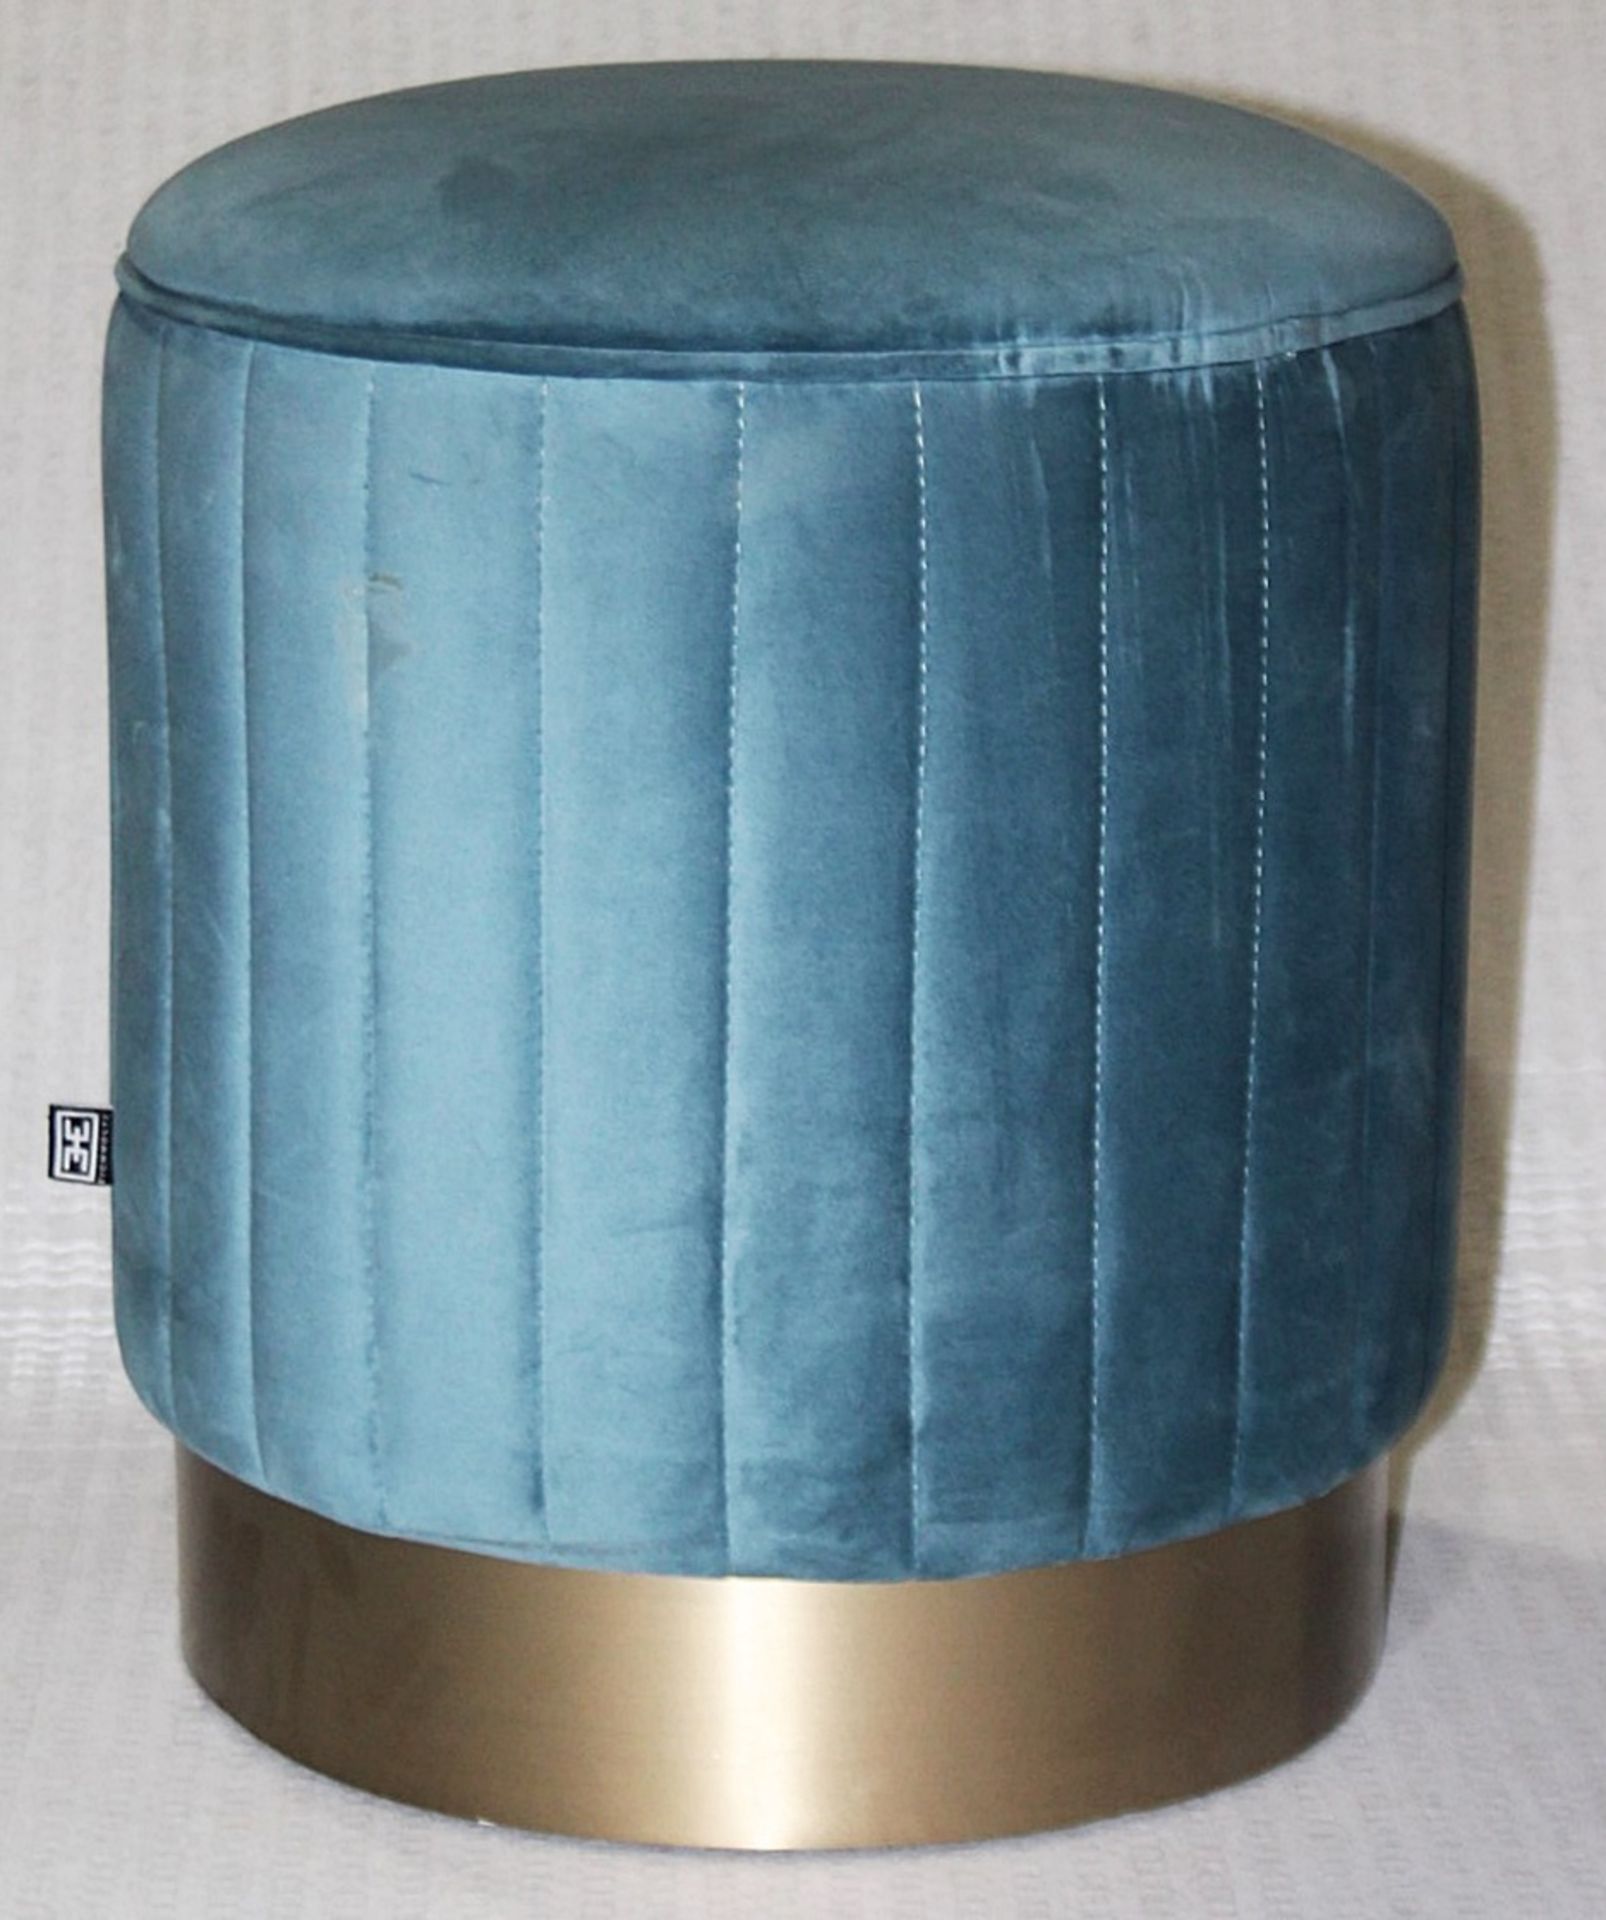 1 x EICHHOLTZ 'Allegra' Luxury Teal Velvet Vanity Stool, With A Brass Base - Original Price £850.00 - Image 8 of 9